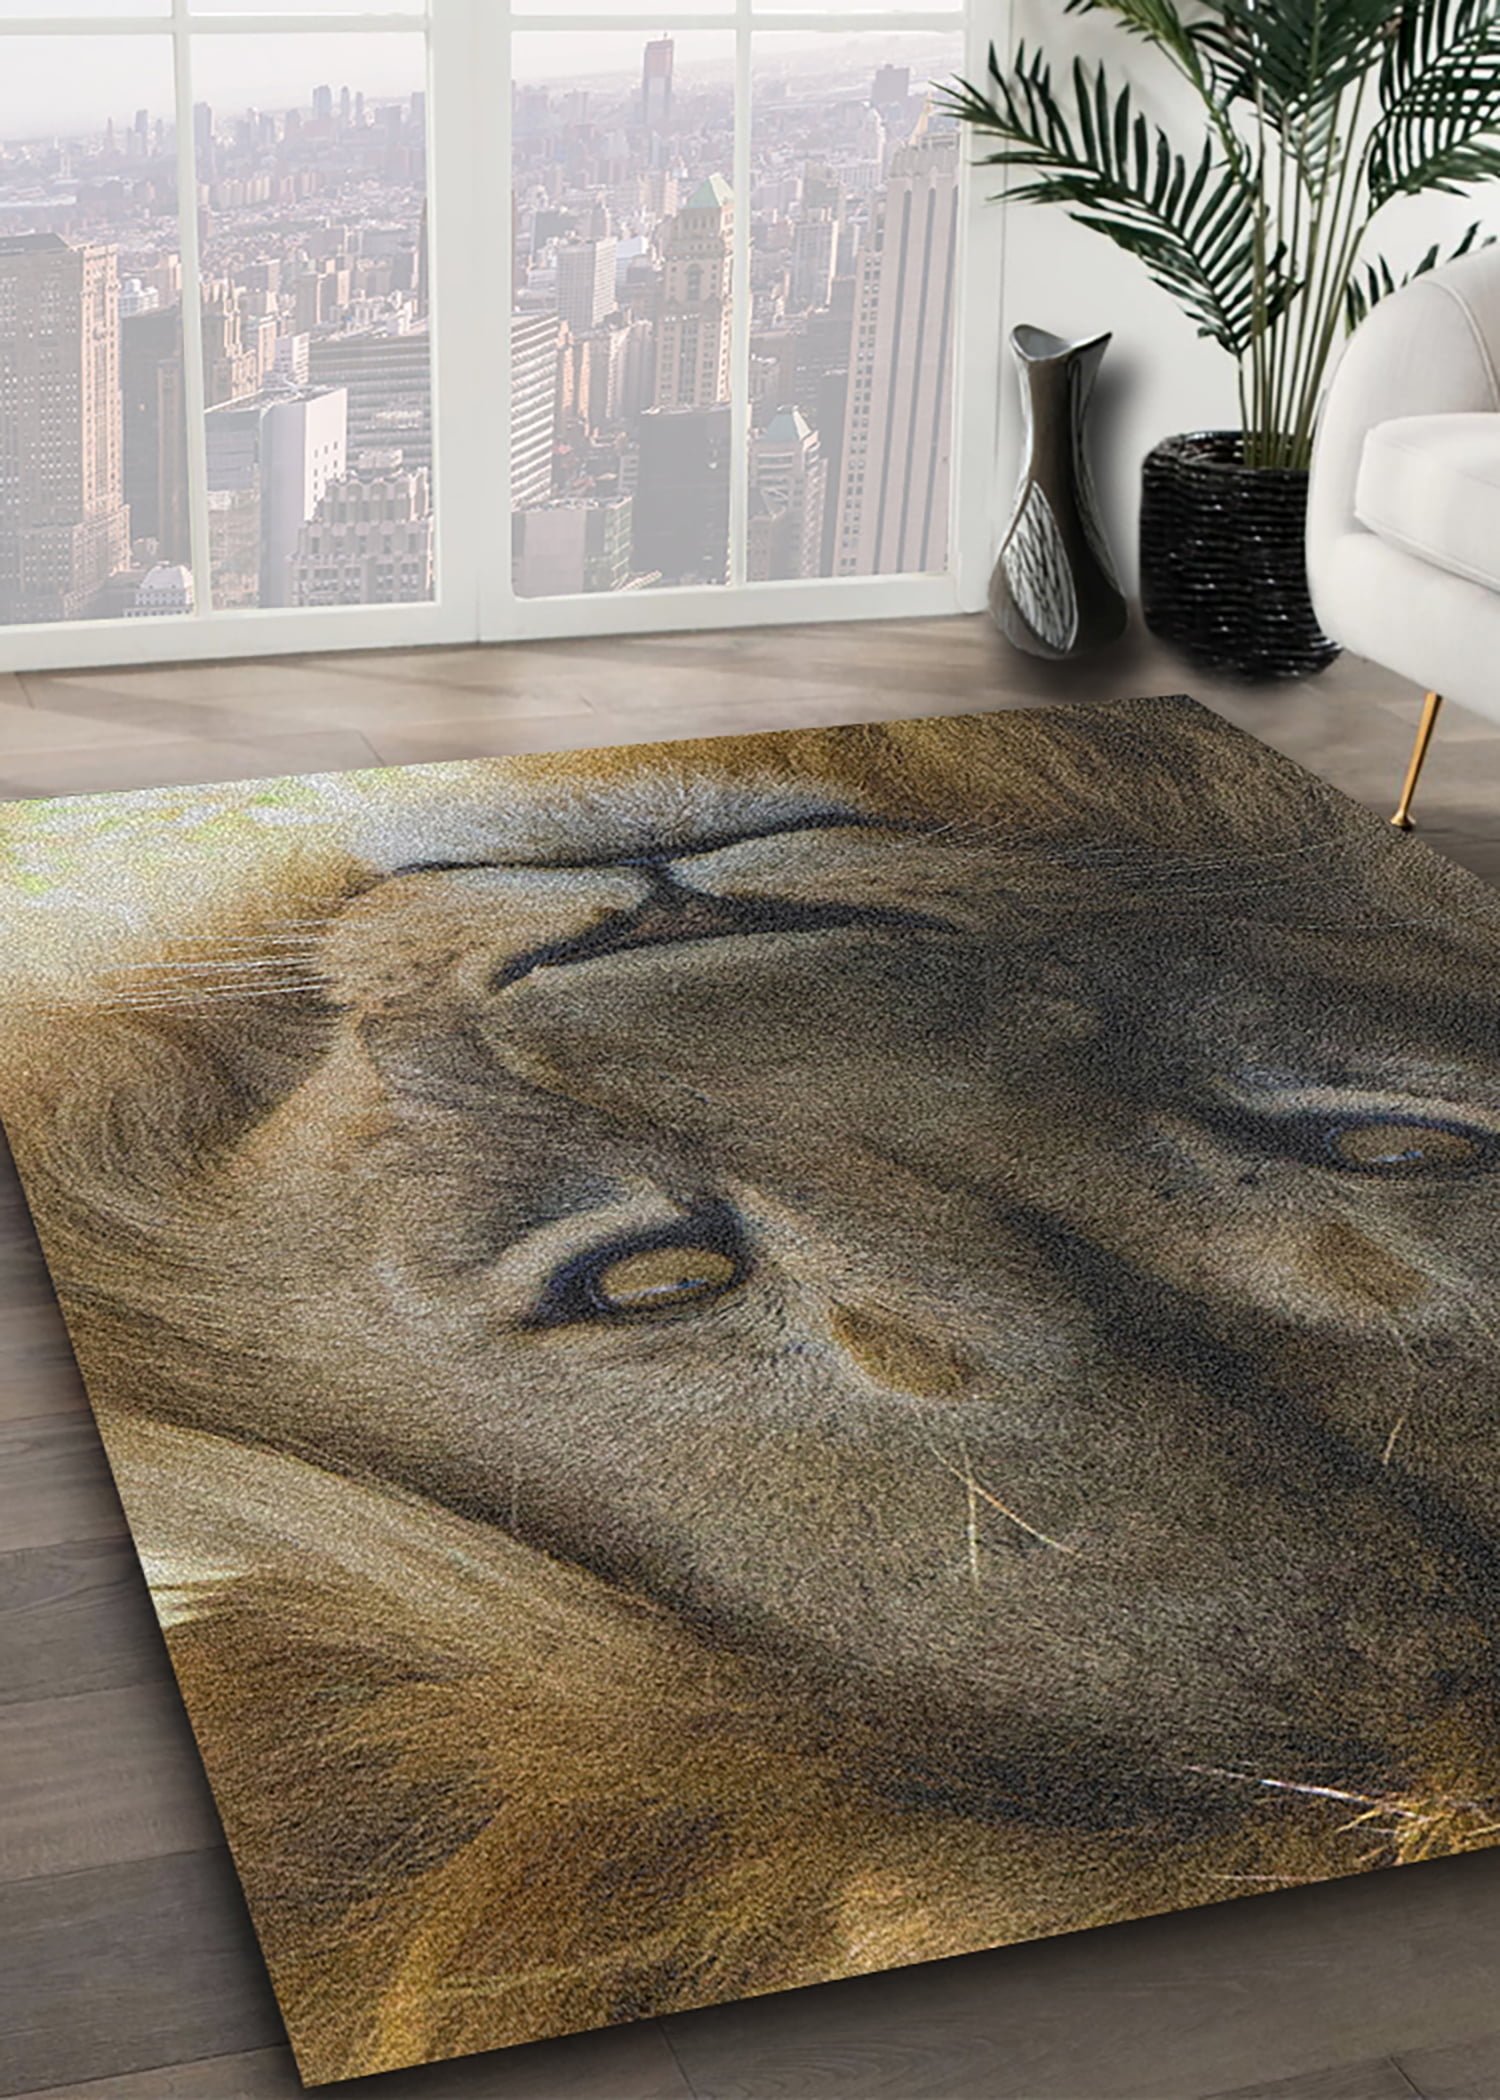 Details about   3D Forest Trees Lions G043 Animal Non Slip Rug Mat Elegant Photo Carpet Honey 